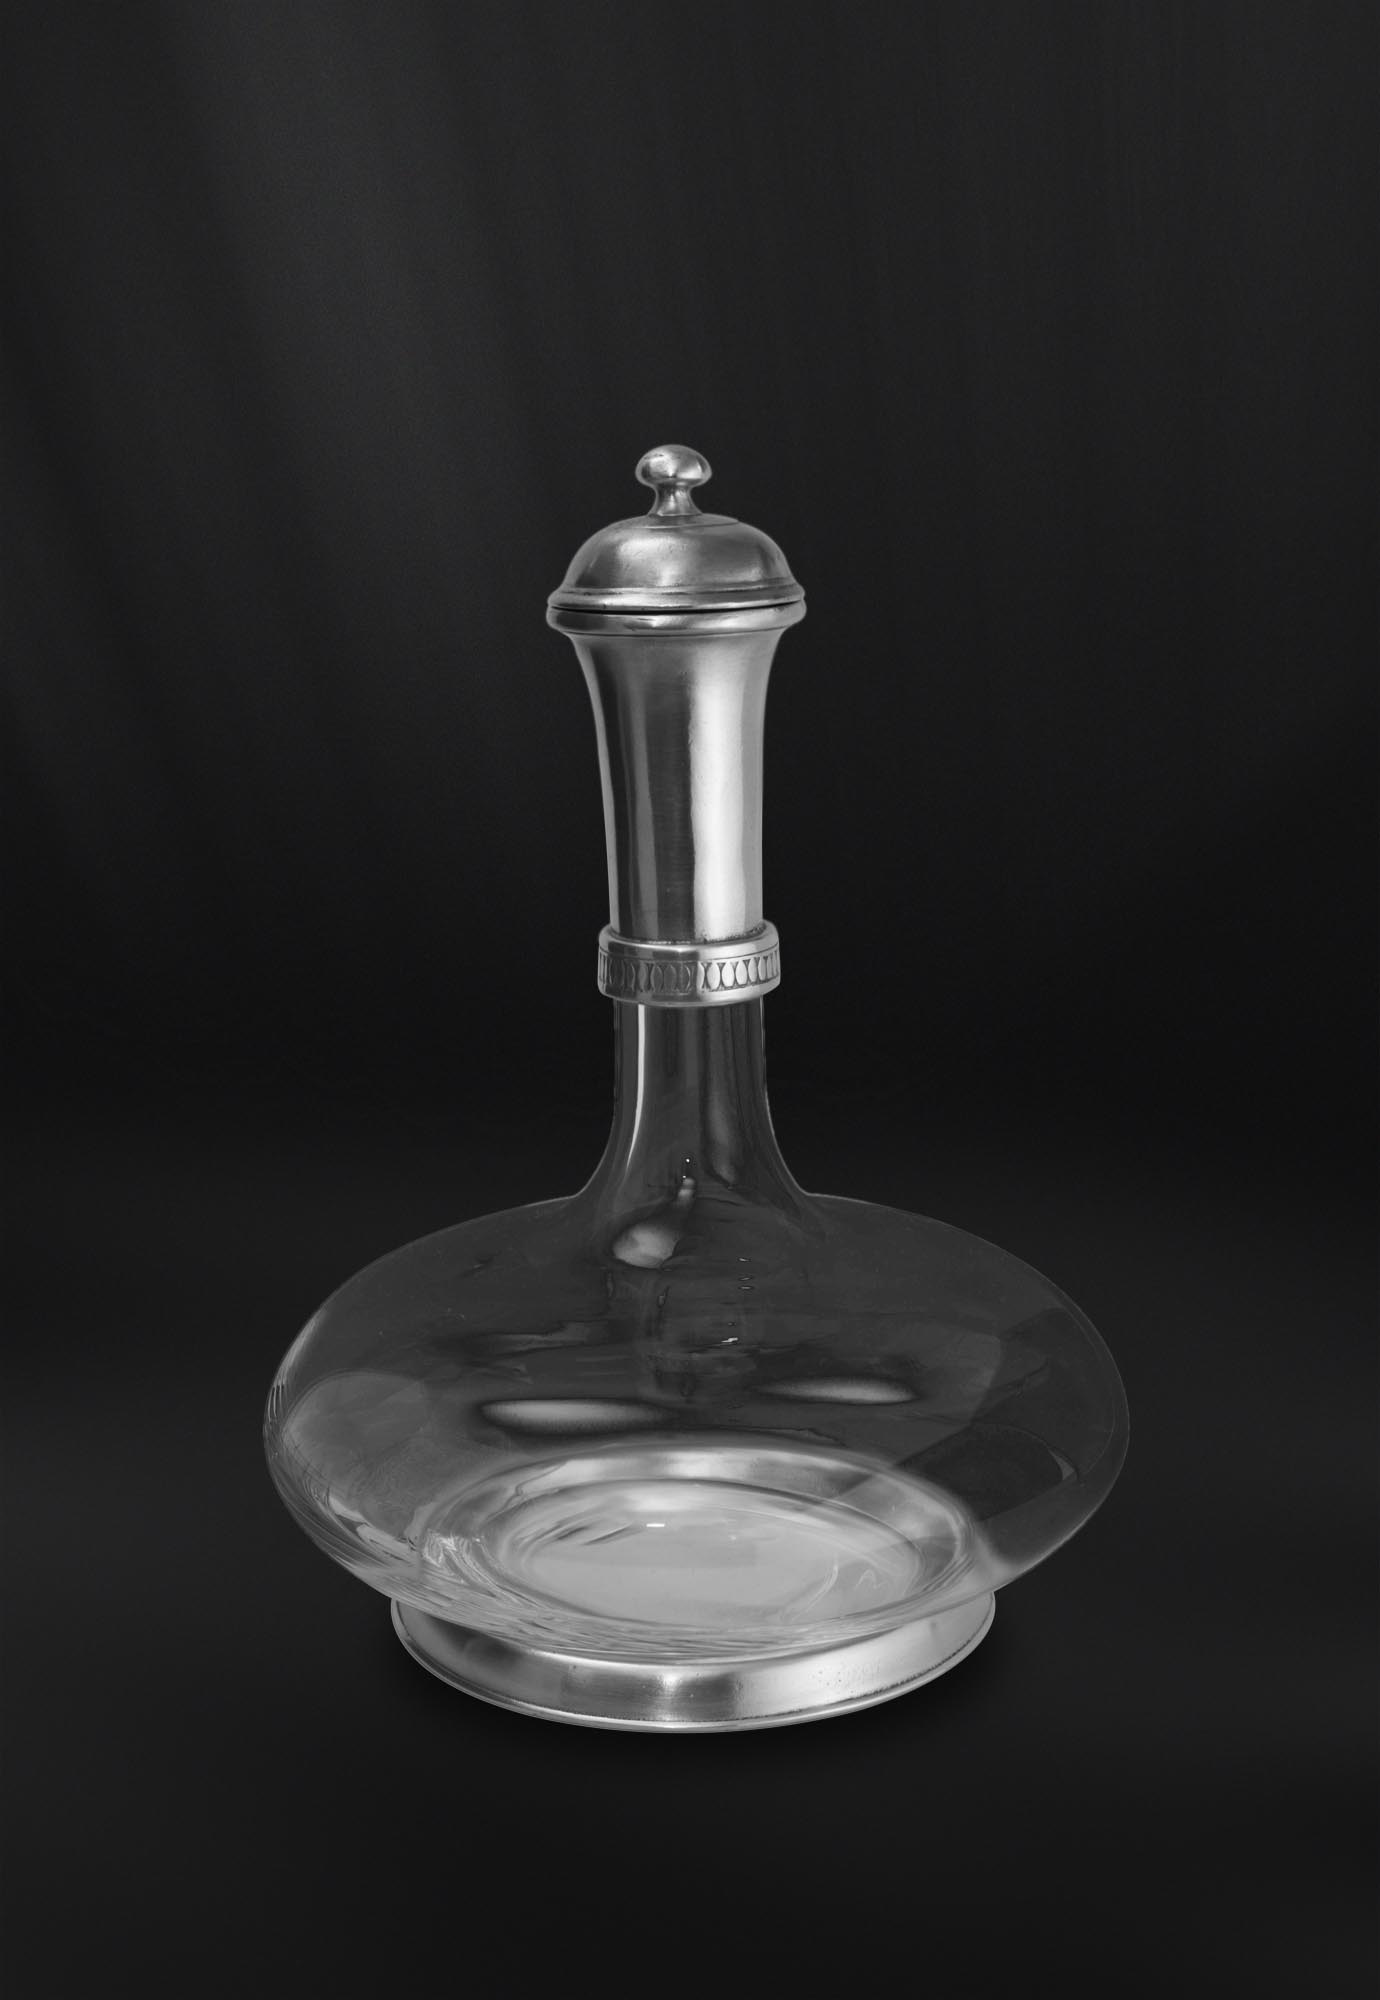 https://pewter-gt.com/wp-content/uploads/2016/07/decanter-pewter-glass-top-handmade-italy-italian-626.jpg